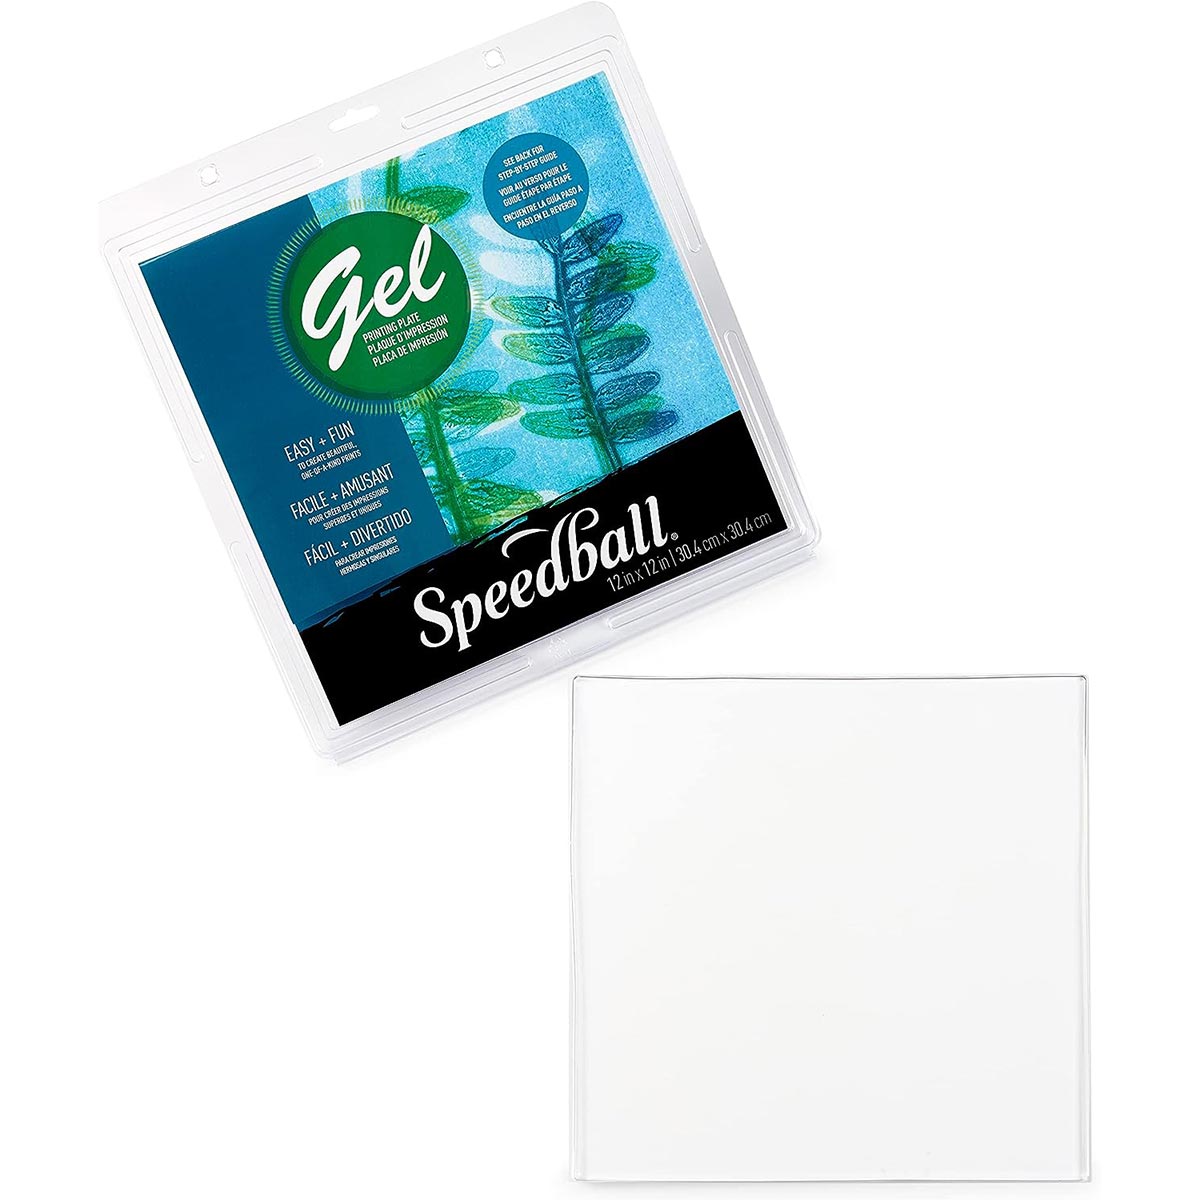 Speedball - Gel Printing Plate 12 x 12 inch - 30 x 30cm